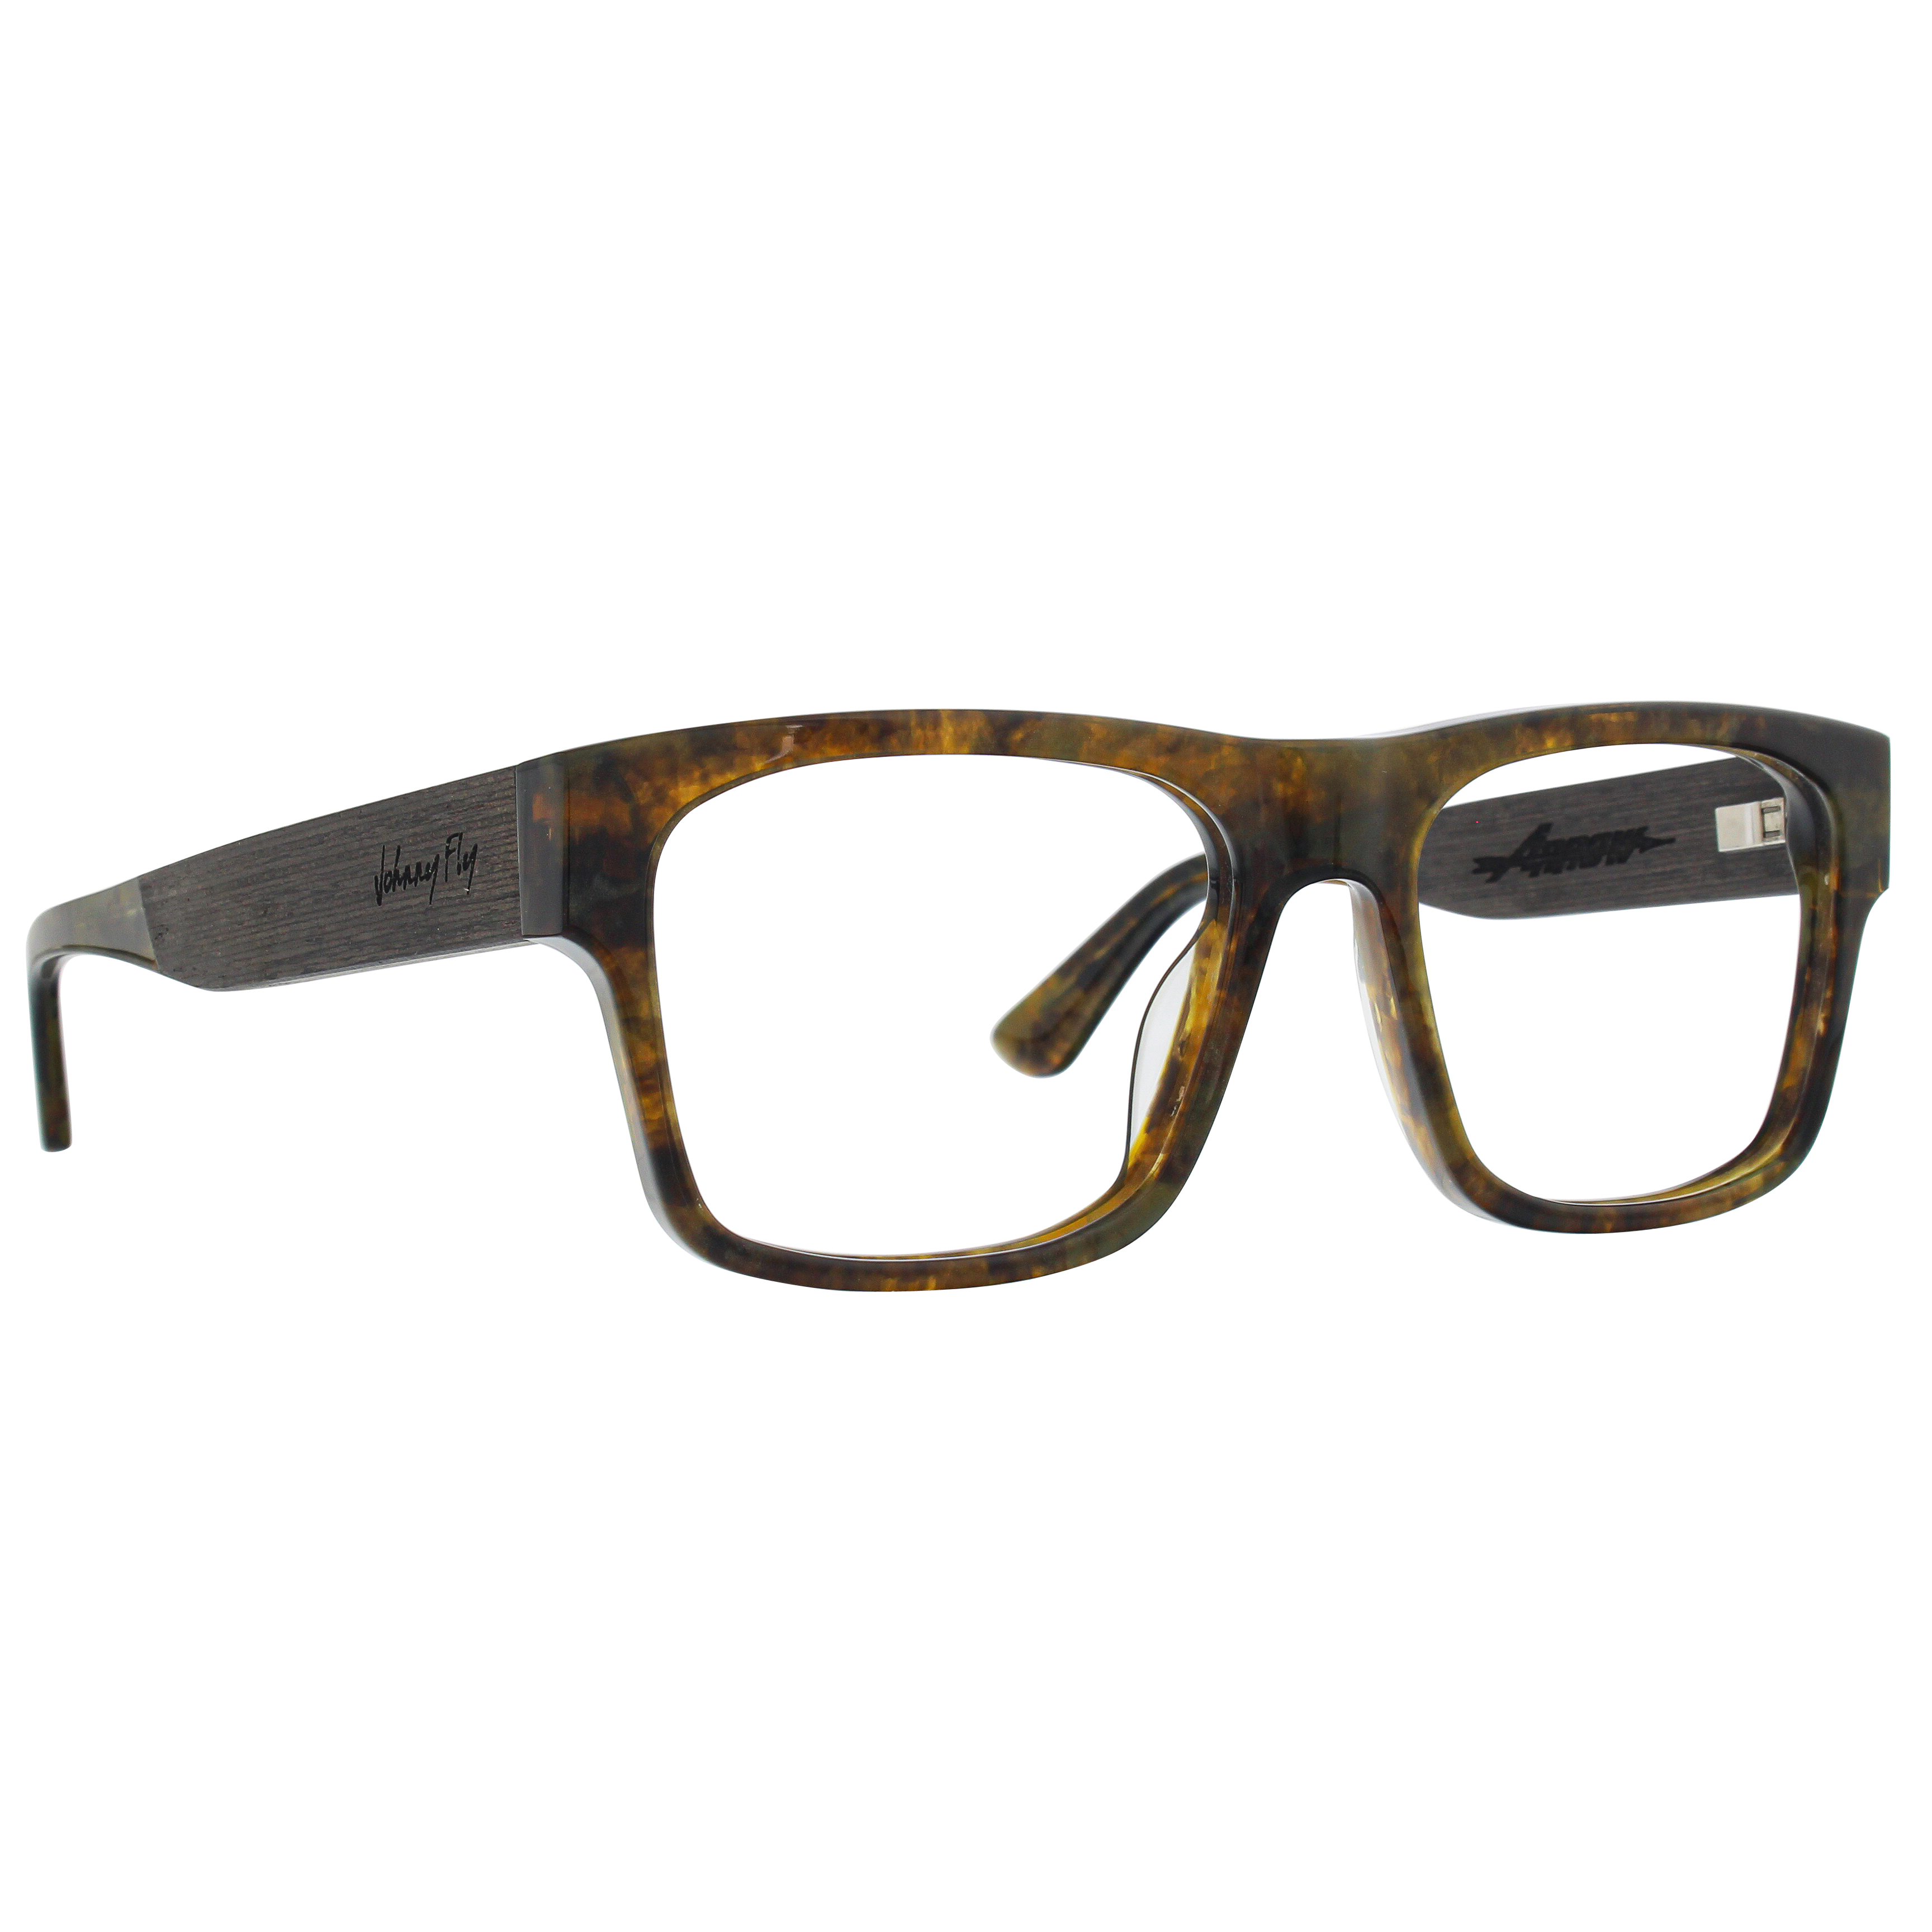 ARROW Frame - Mars - Eyeglasses Frame - Johnny Fly Eyewear 